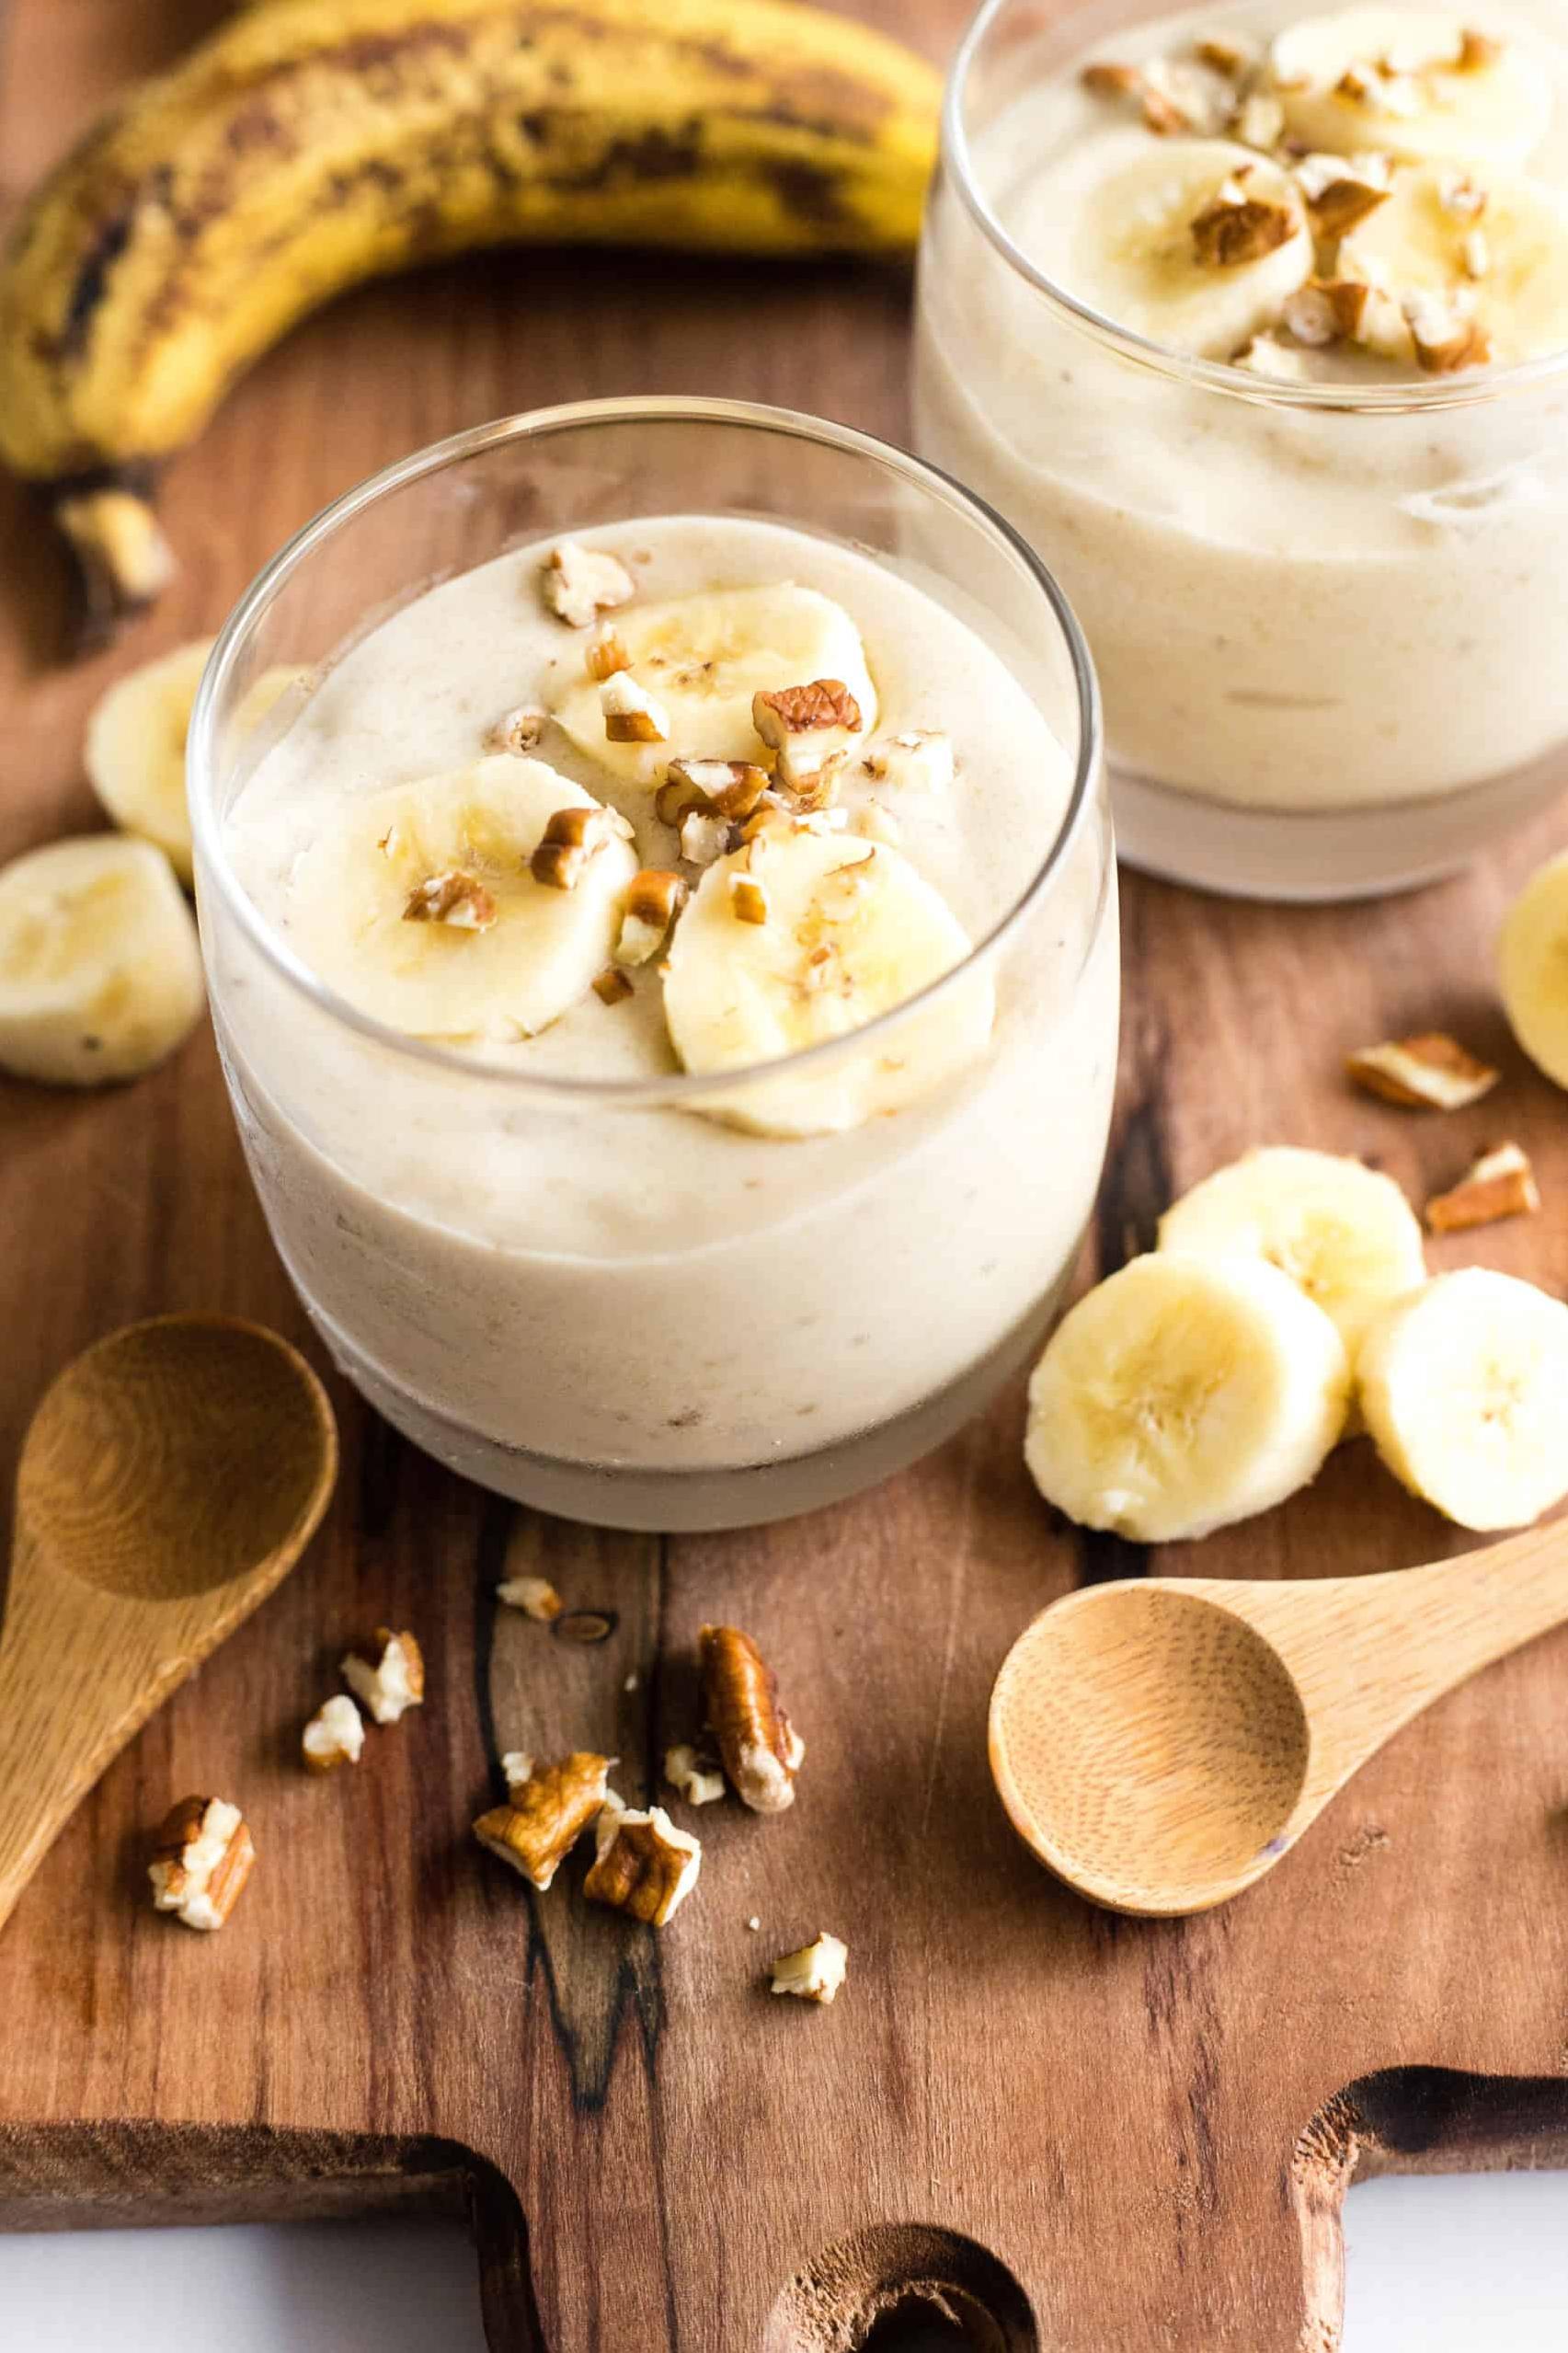  Creamy vegan banana ice cream, the perfect gluten-free treat!